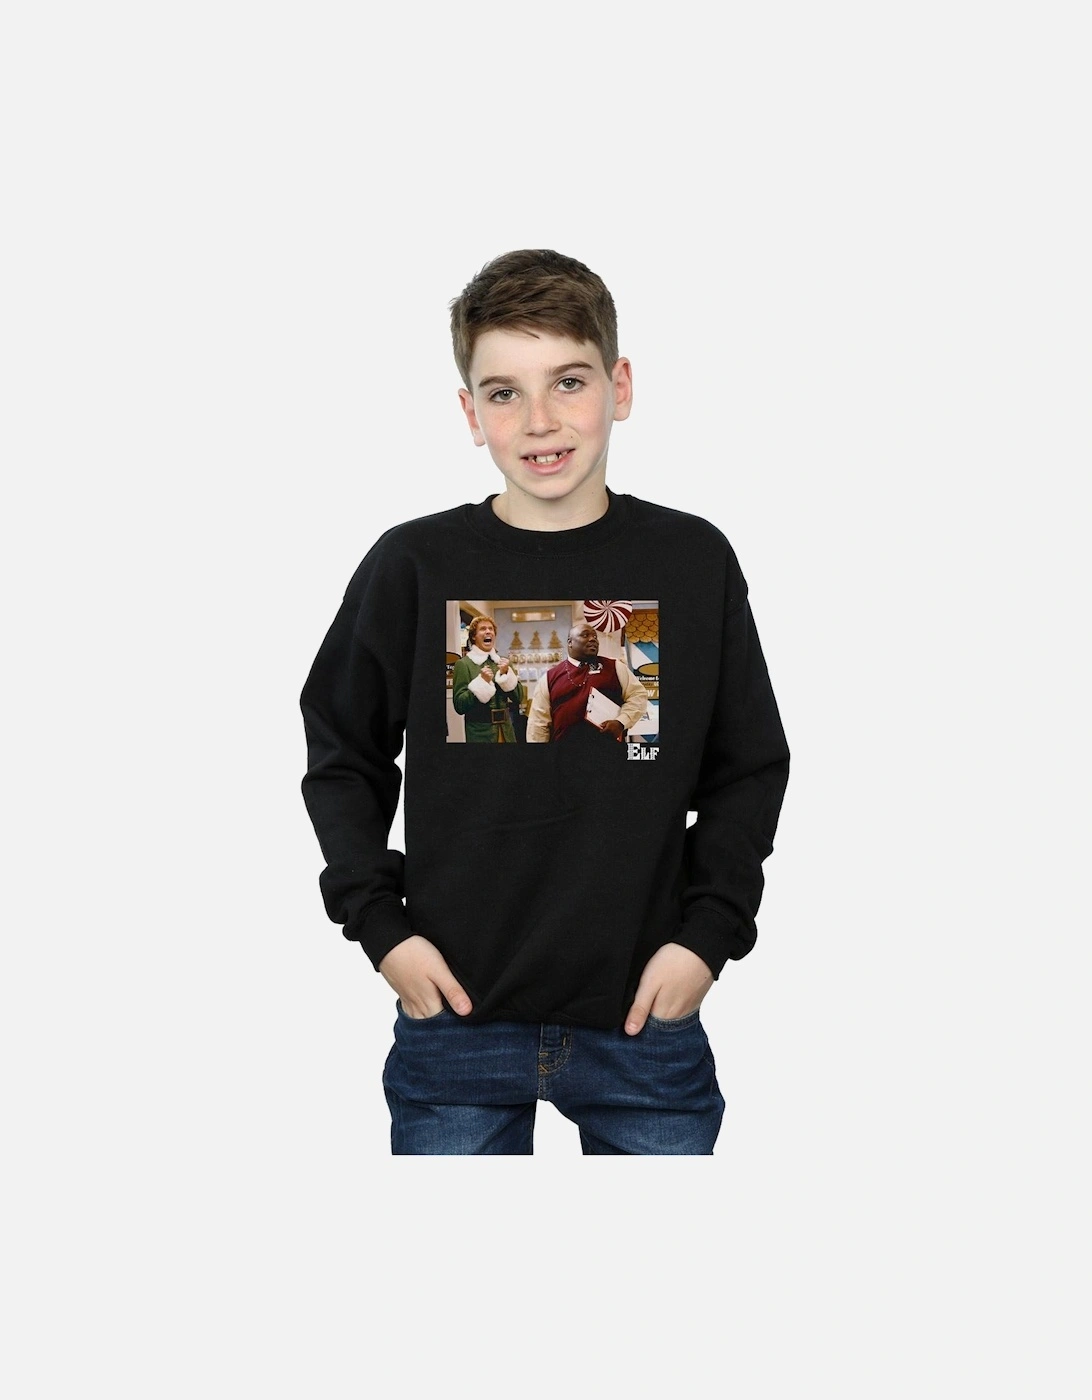 Boys Christmas Store Cheer Sweatshirt